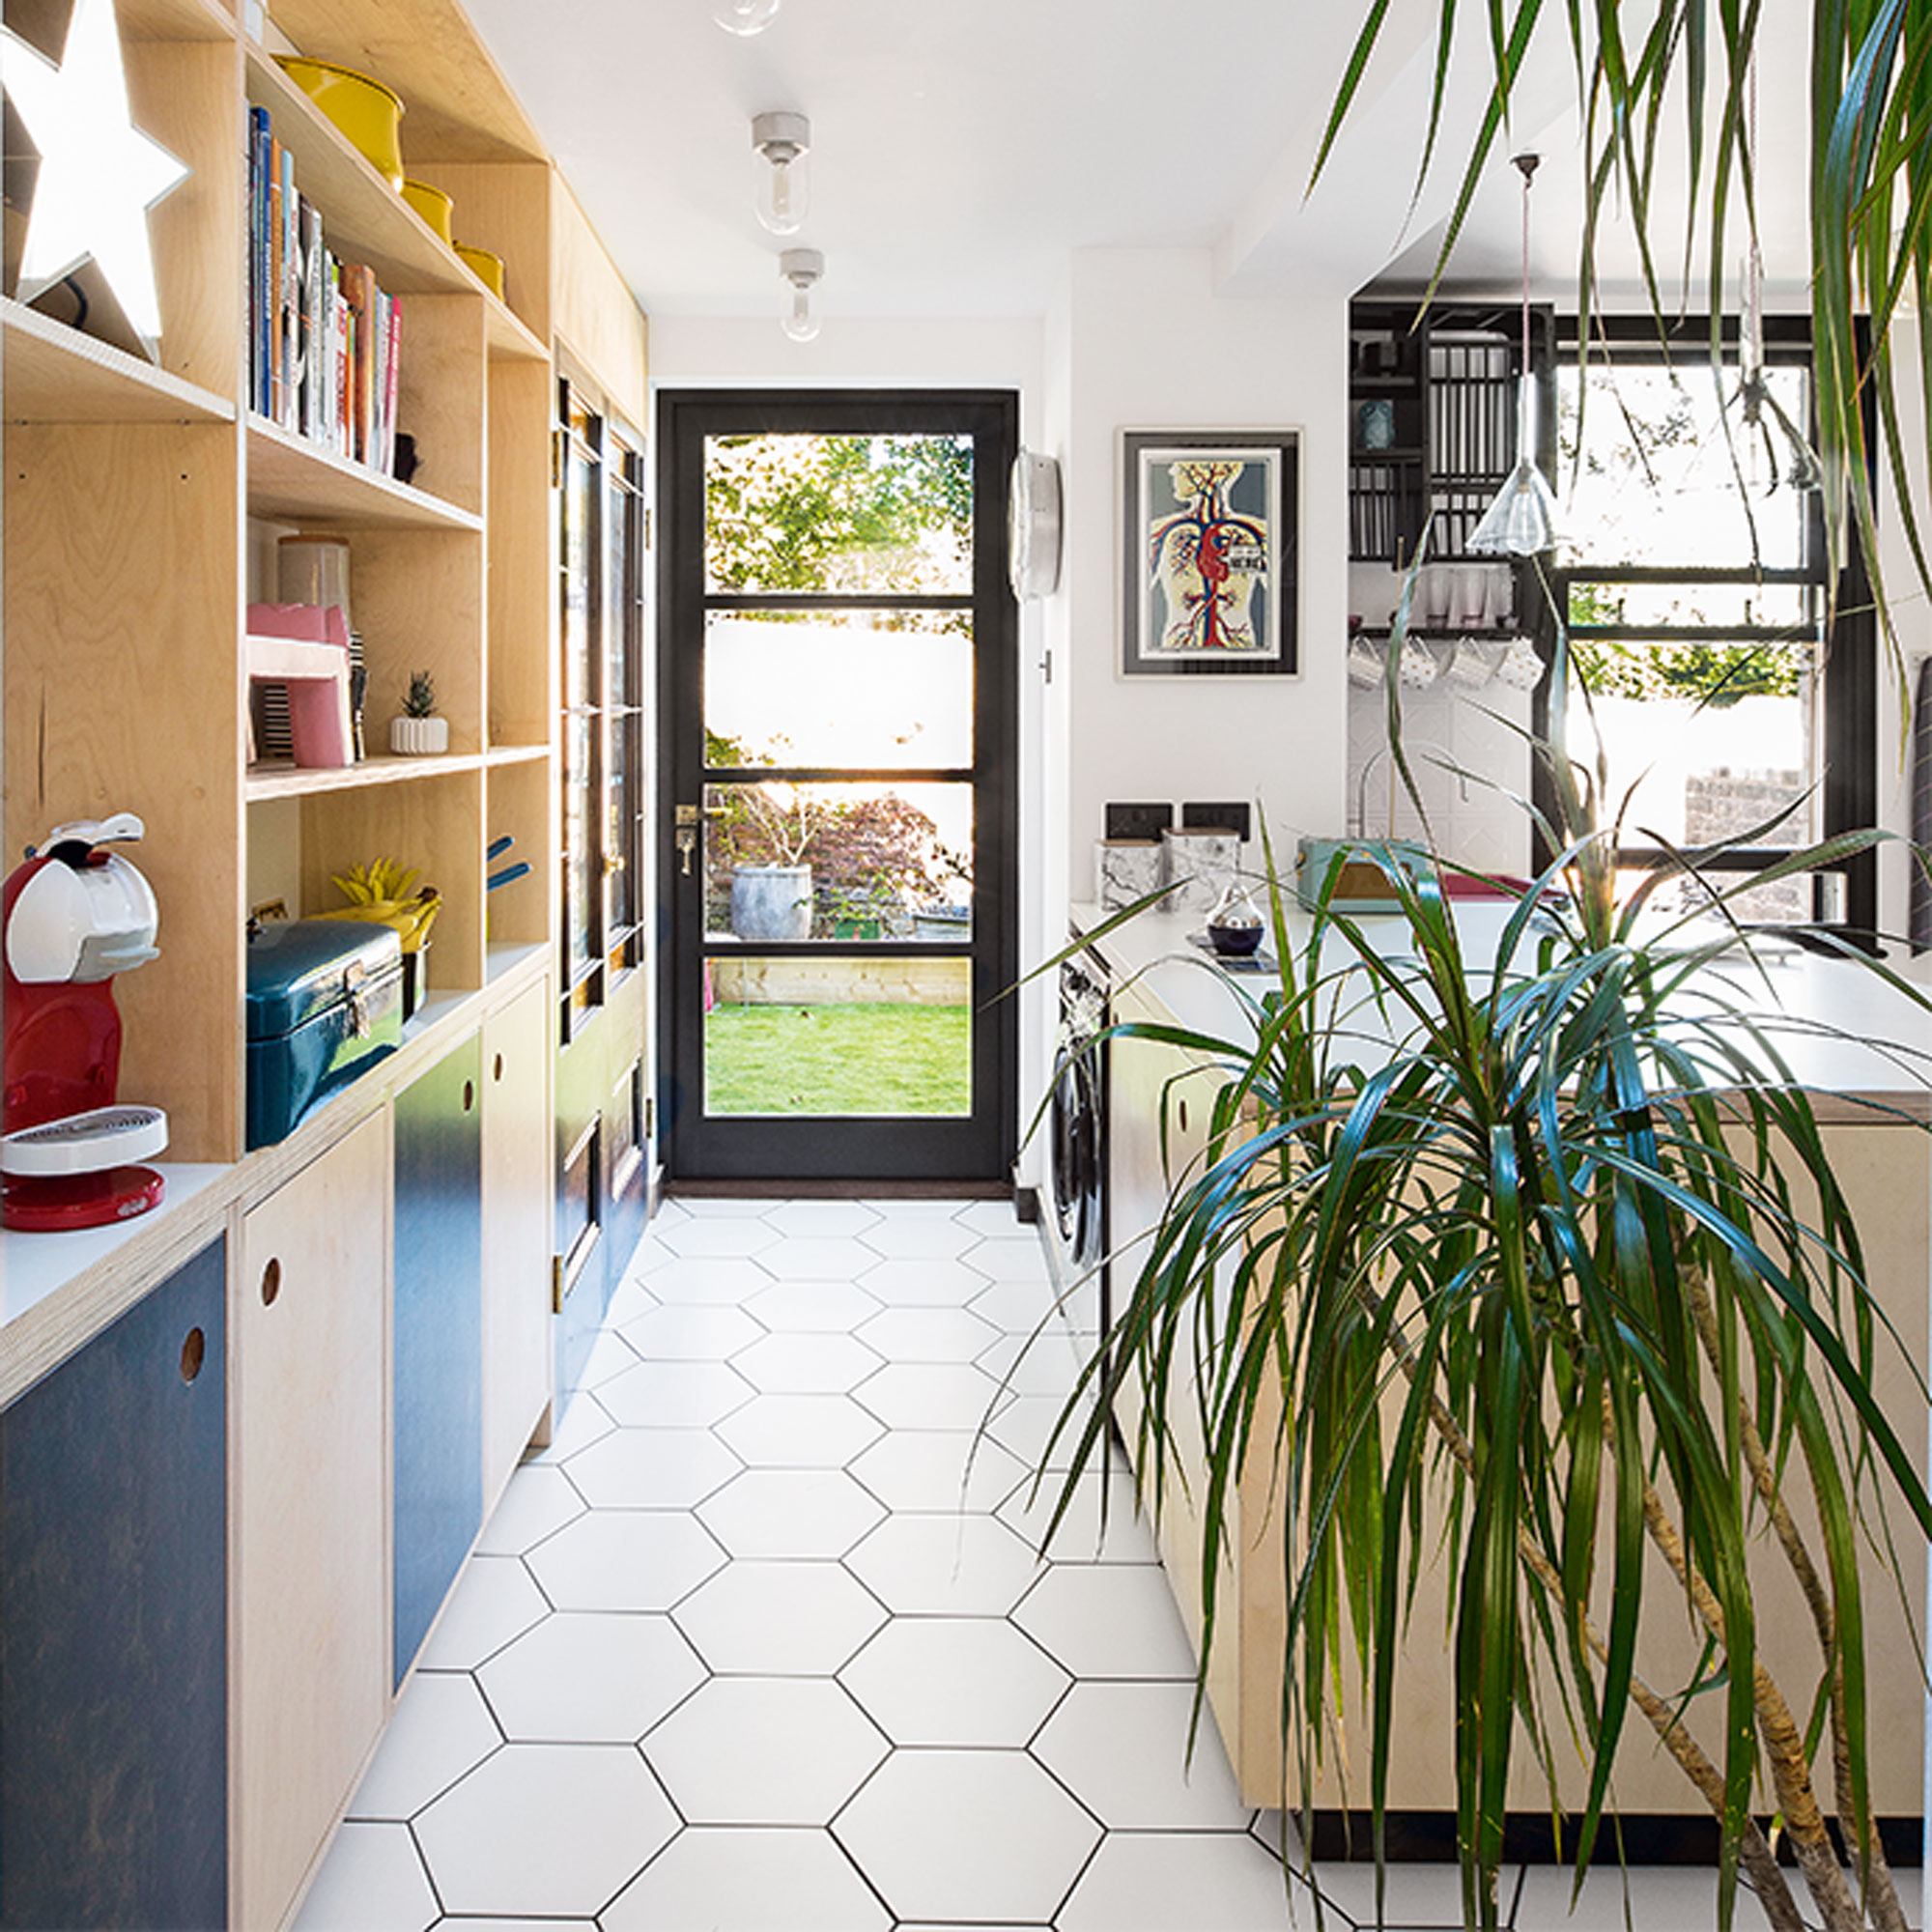 Modern kitchen flooring ideas – make your floor fabulous   Ideal Home